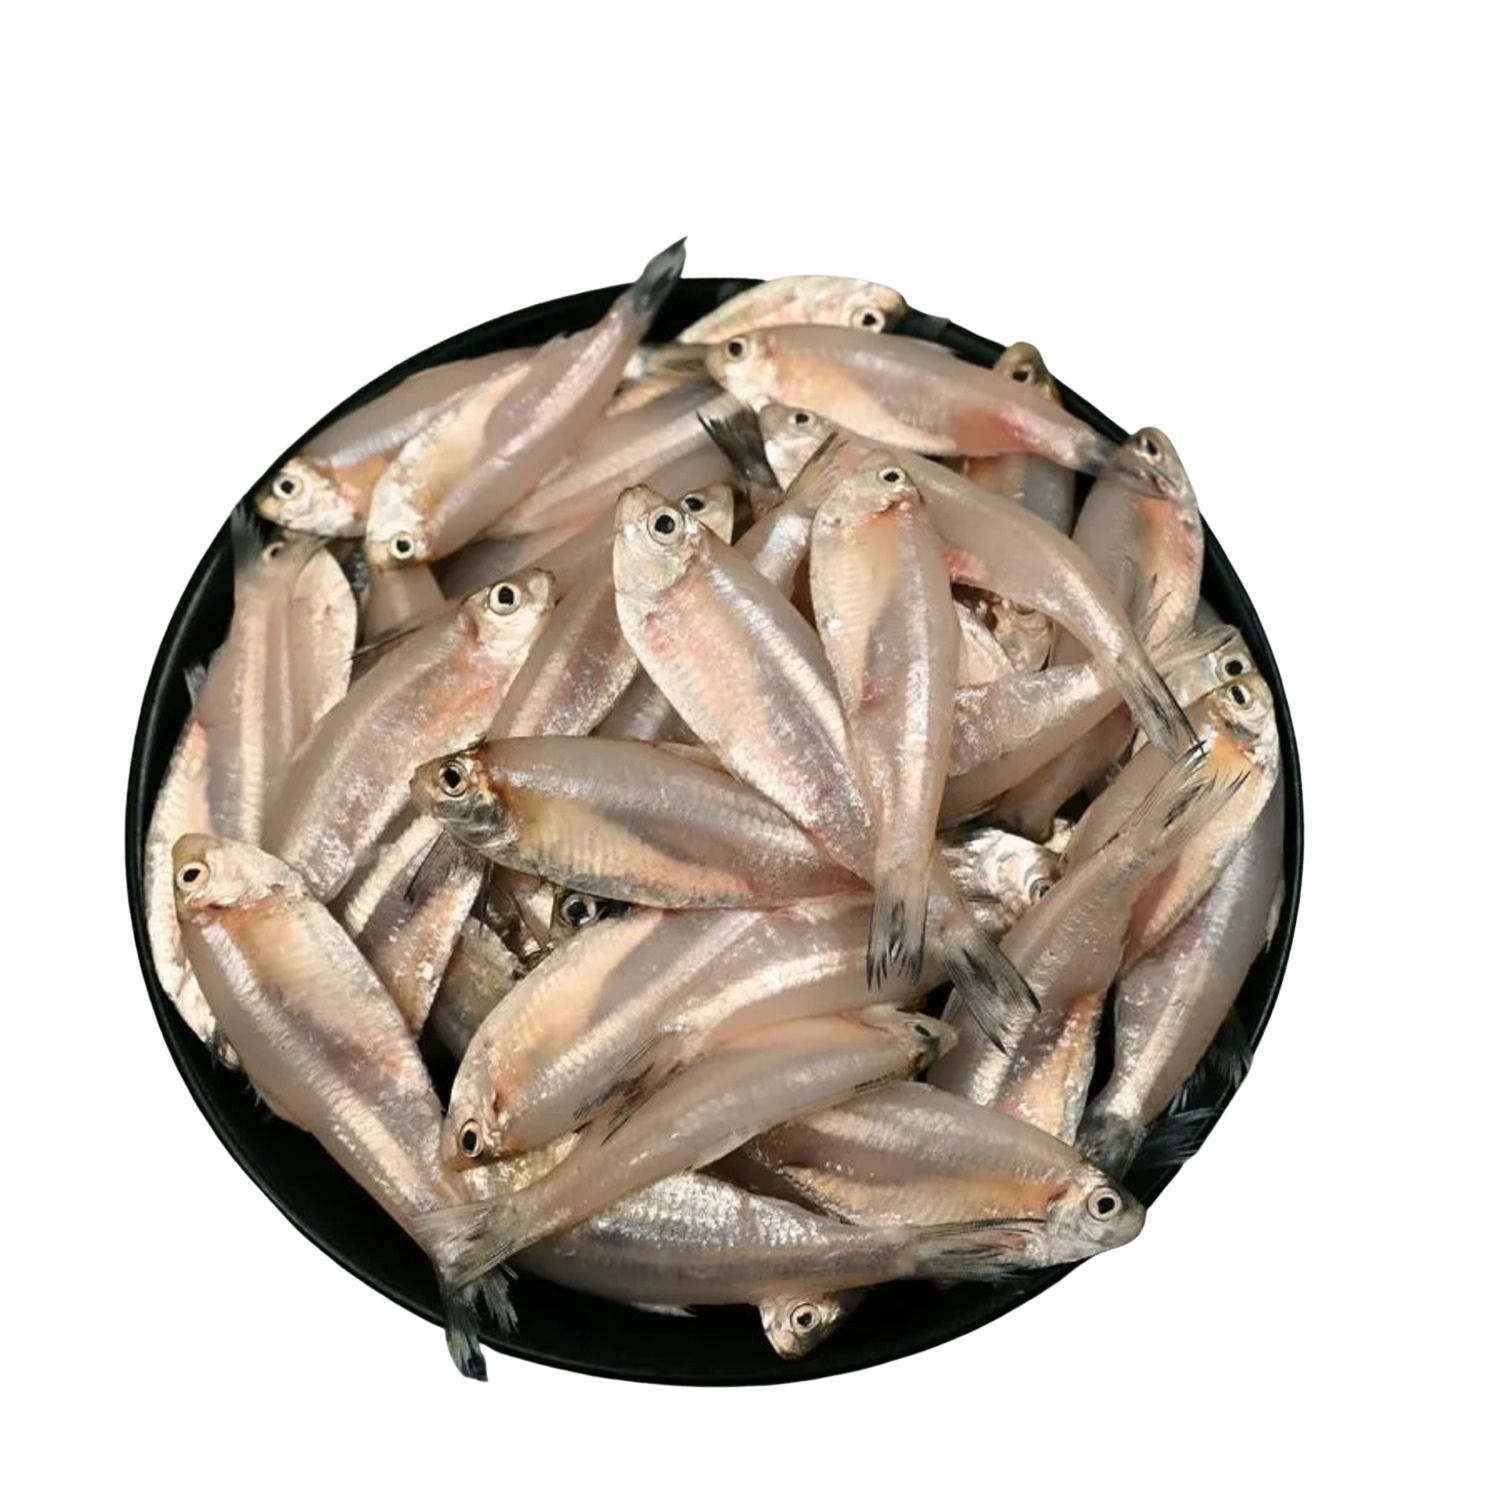 Mourala Fish - Whole